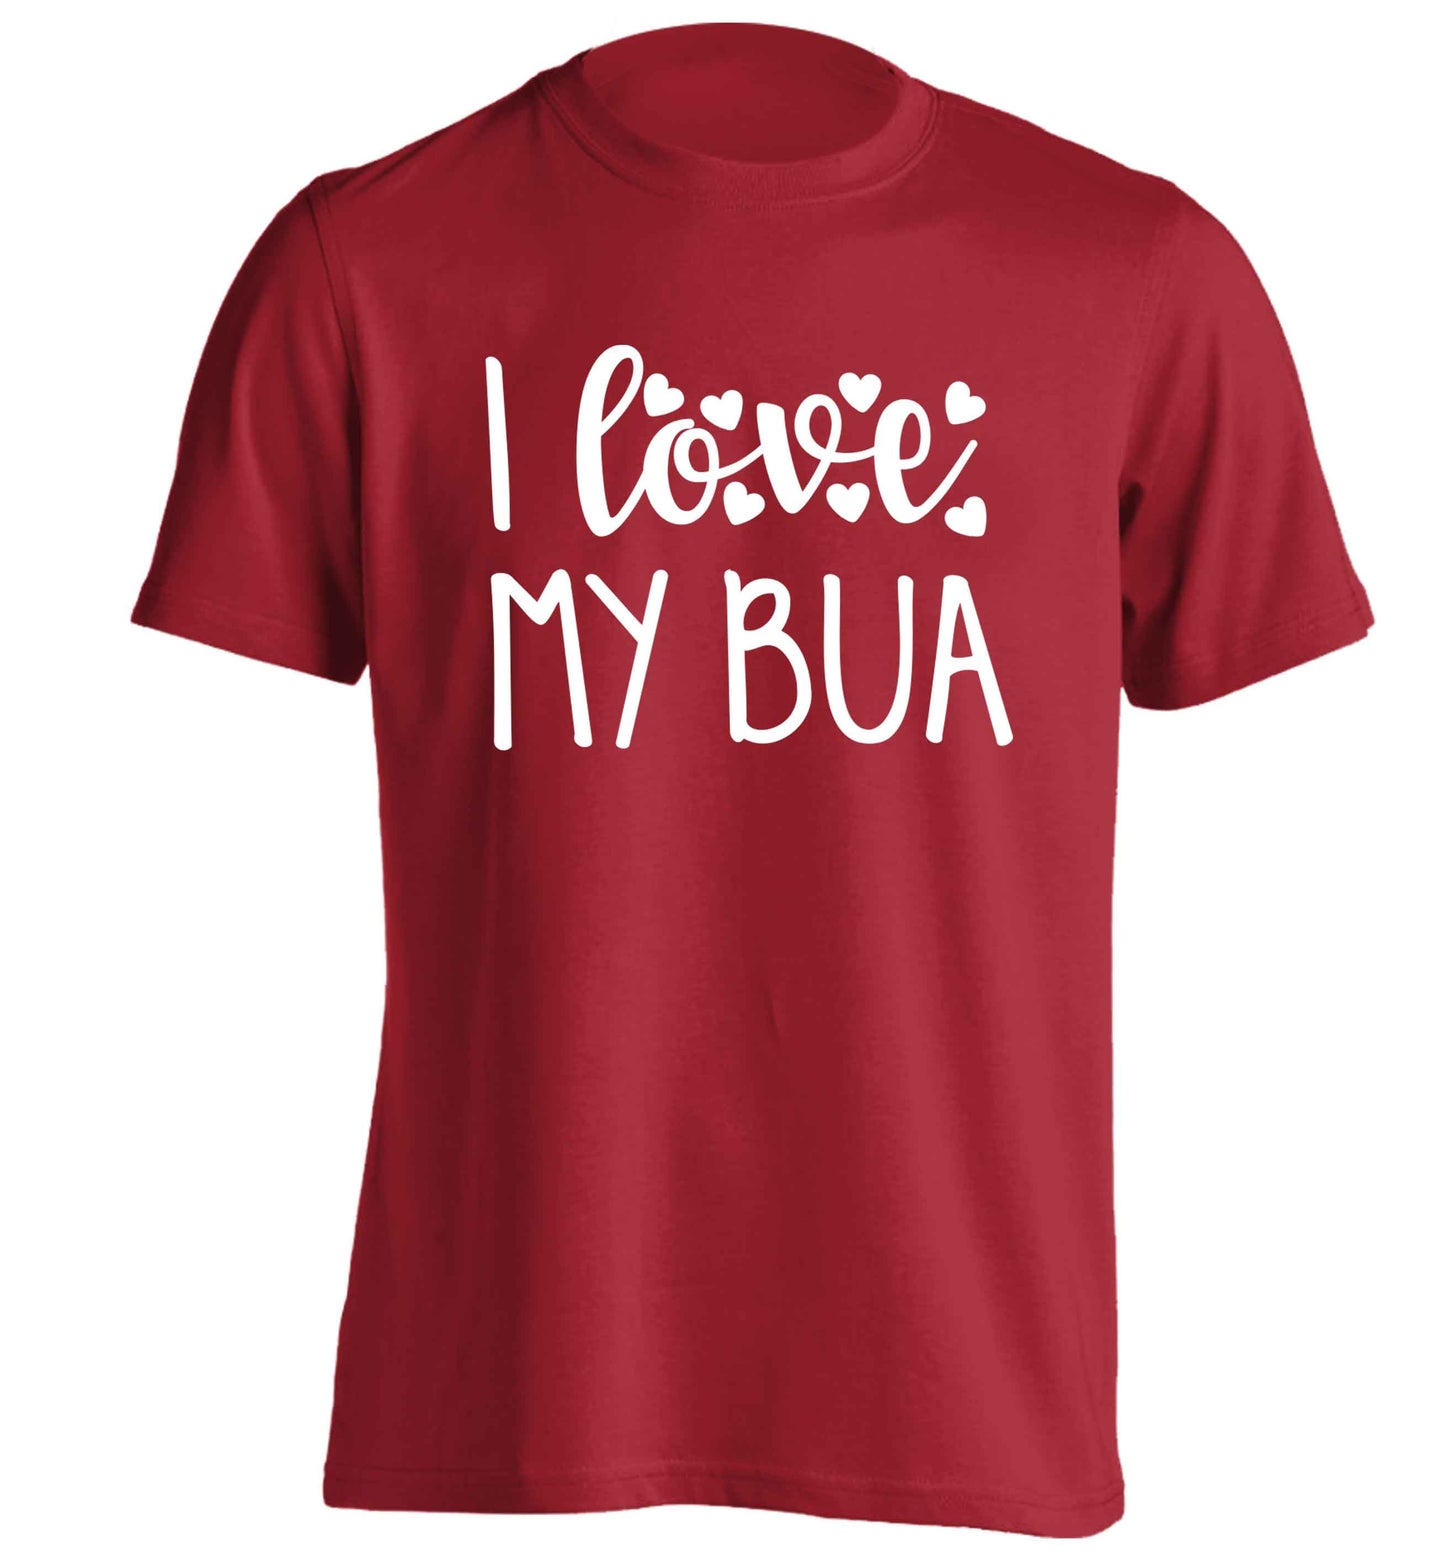 I love my bua adults unisex red Tshirt 2XL